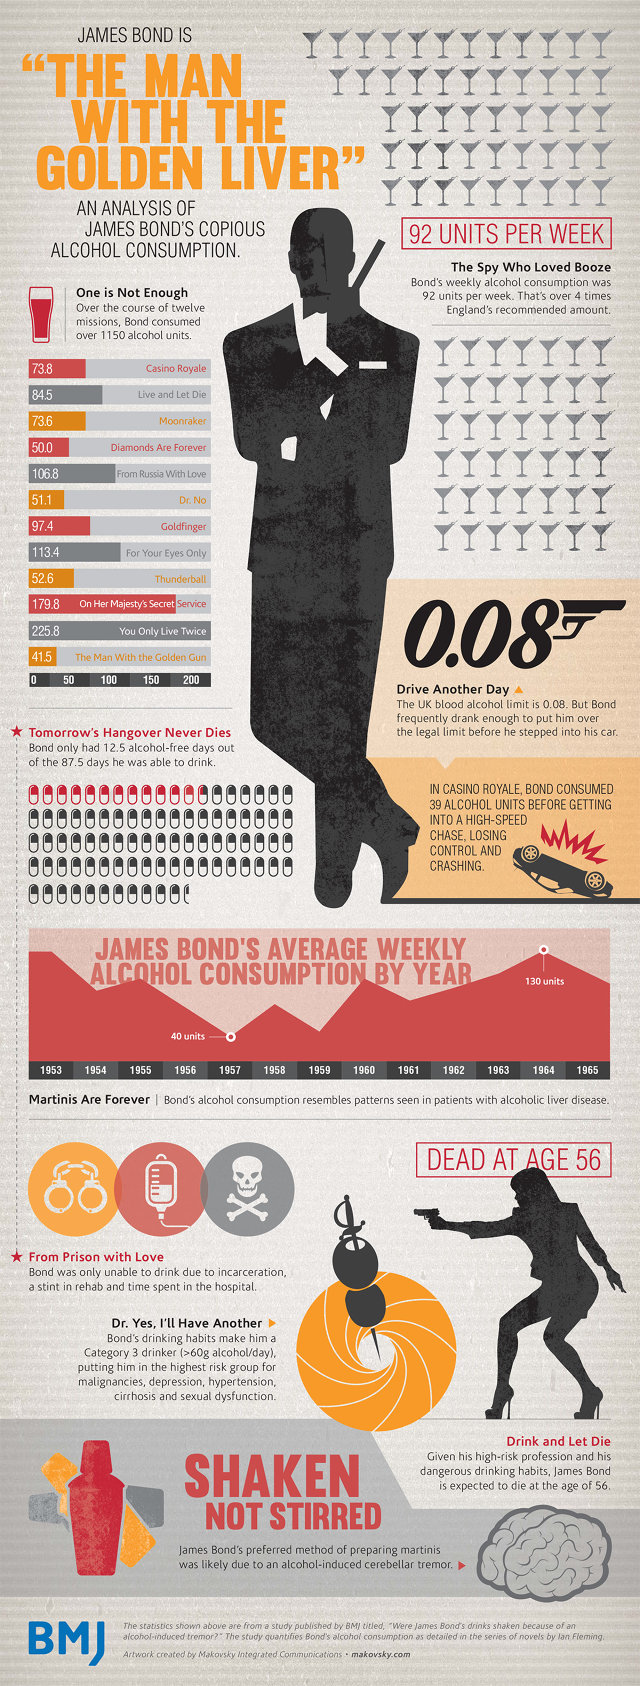 James_Bond_Golden_Liver.jpg